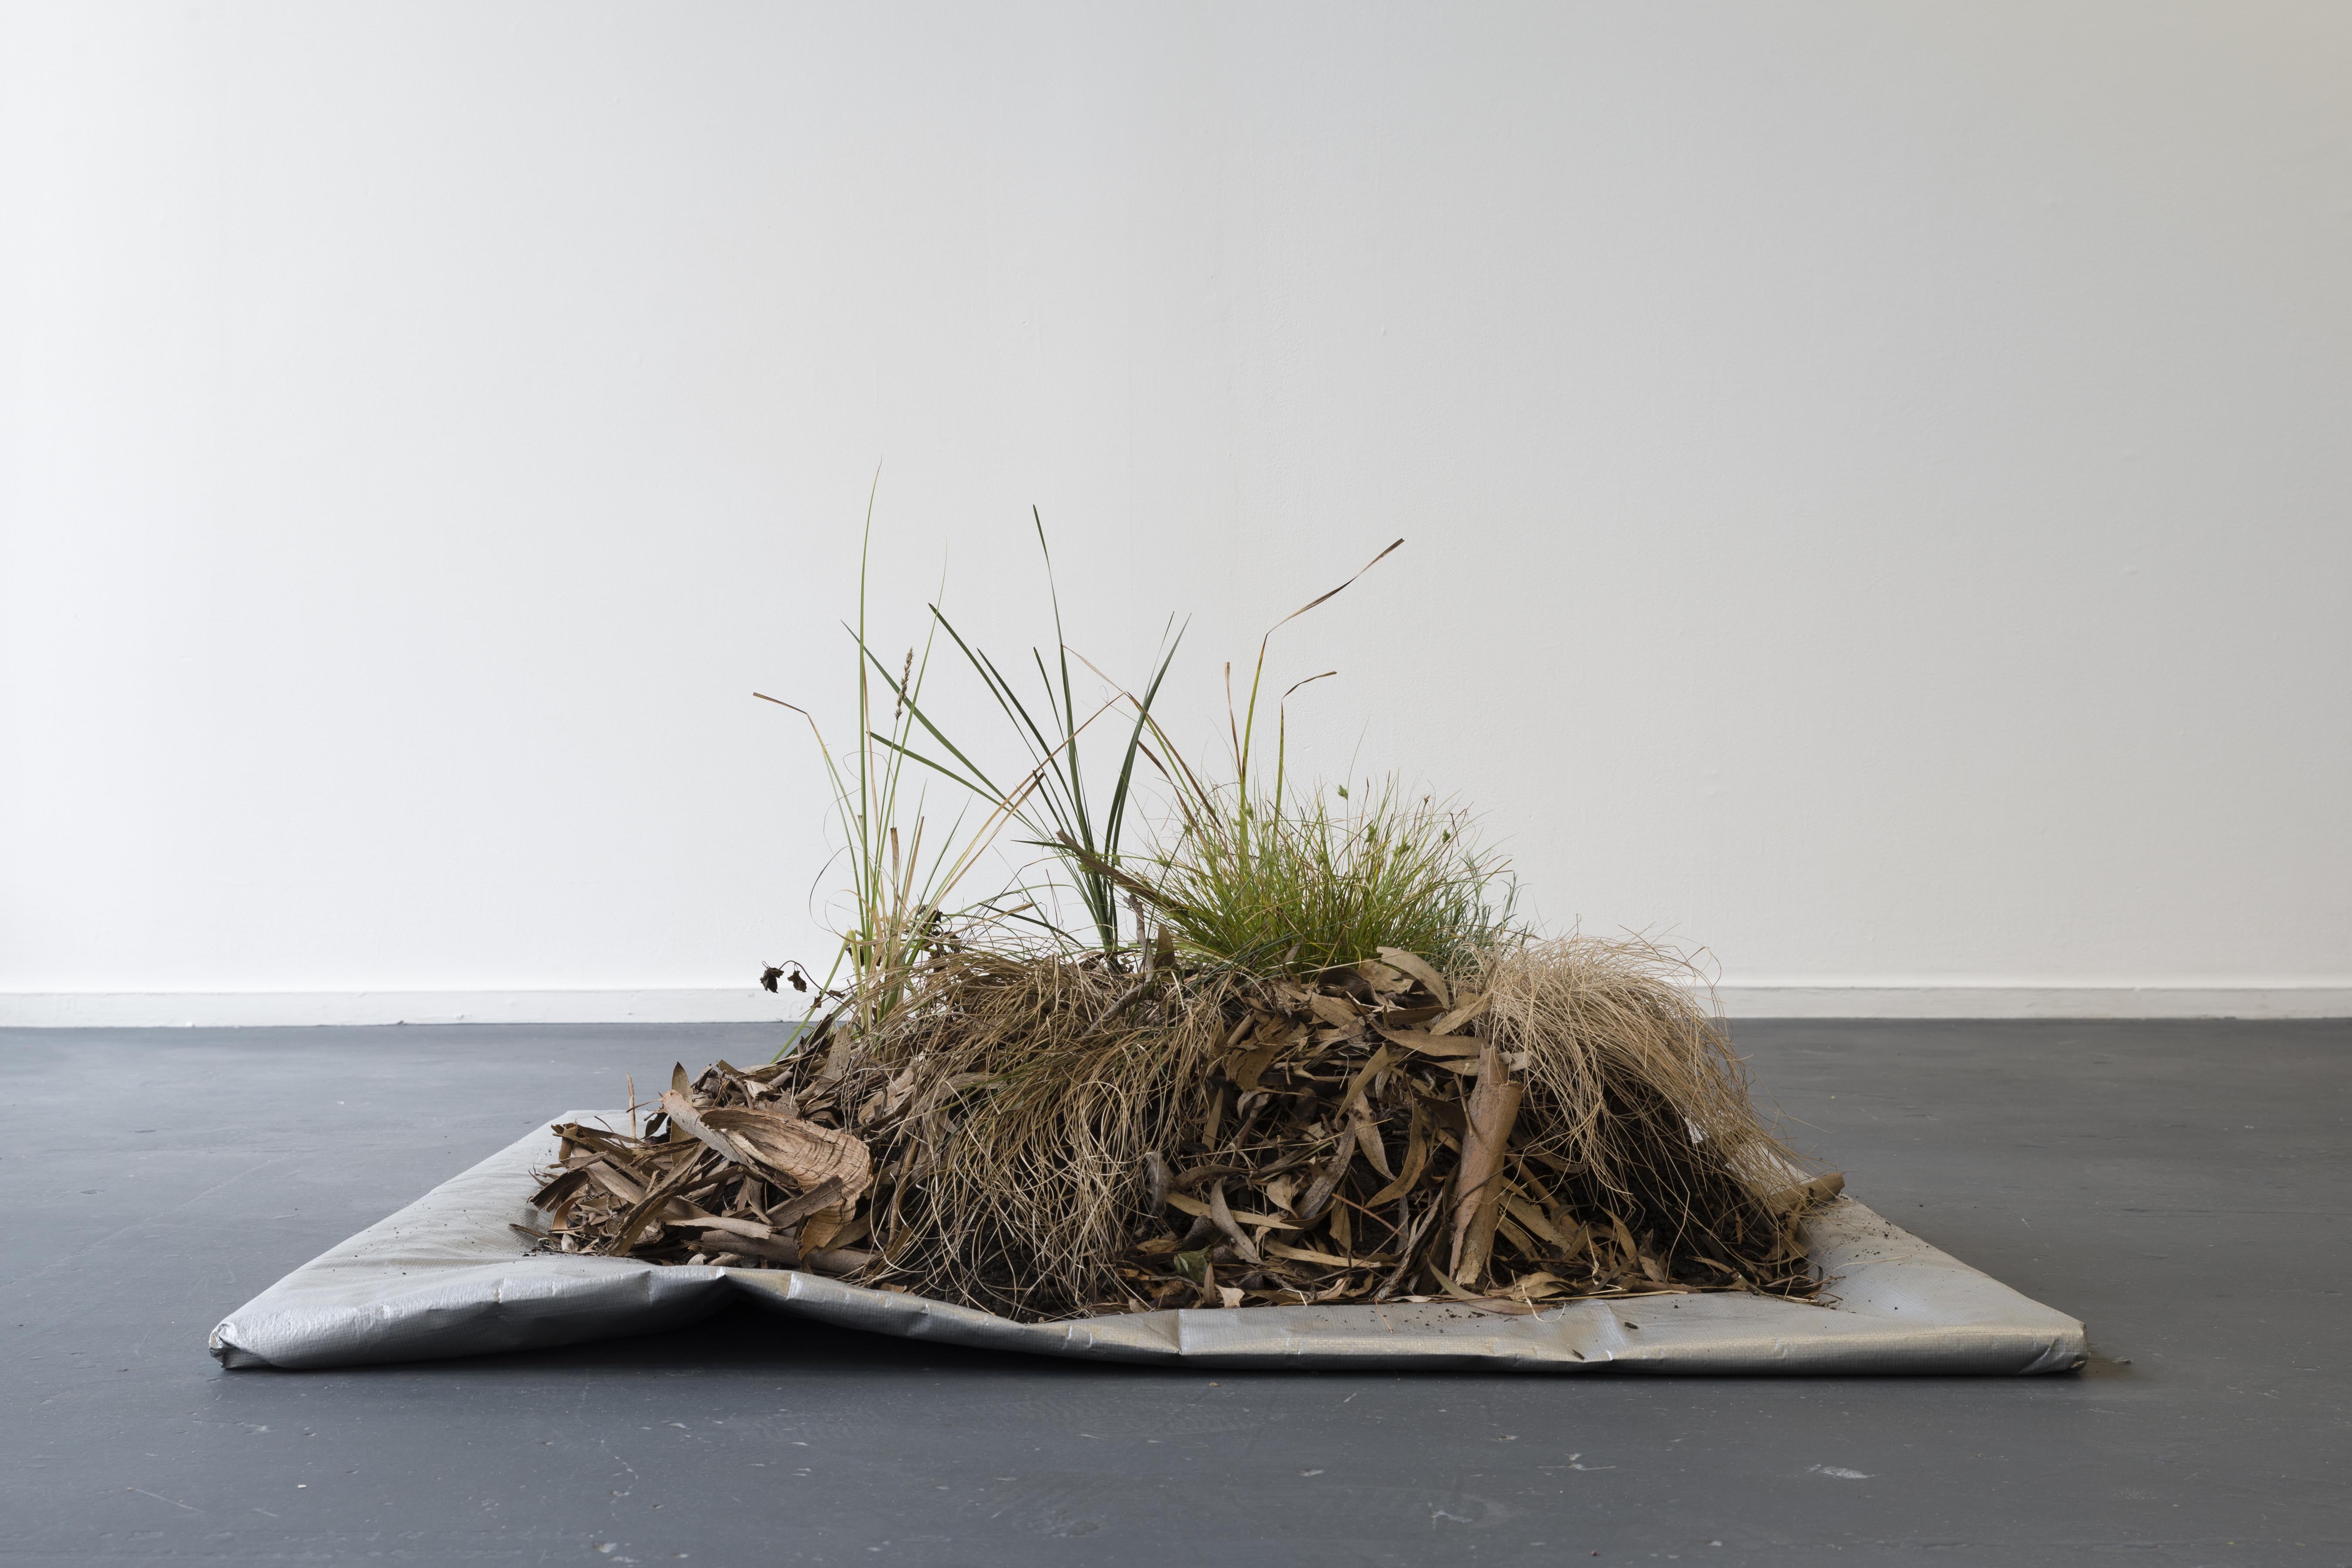 Image 01: Katie West, 'One square metre' (2018), tarp, soils, plants endemic to Naarm, 1m x 1m. Photo: Chris Bowes.